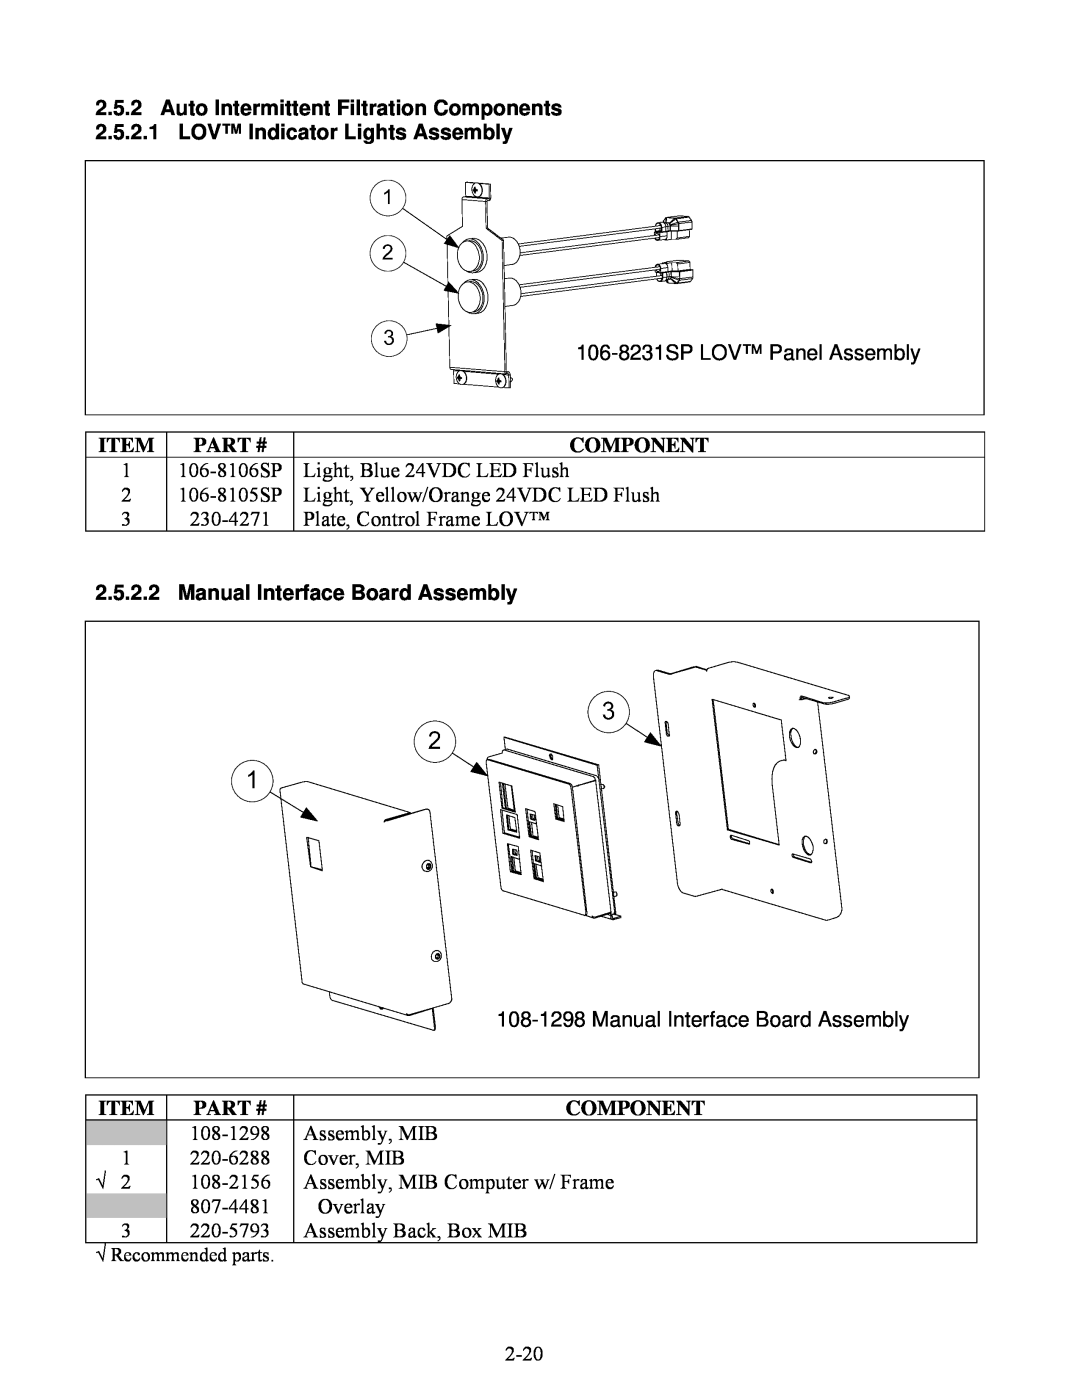 Frymaster BIELA14 manual Manual Interface Board Assembly, Item Part #, Component 